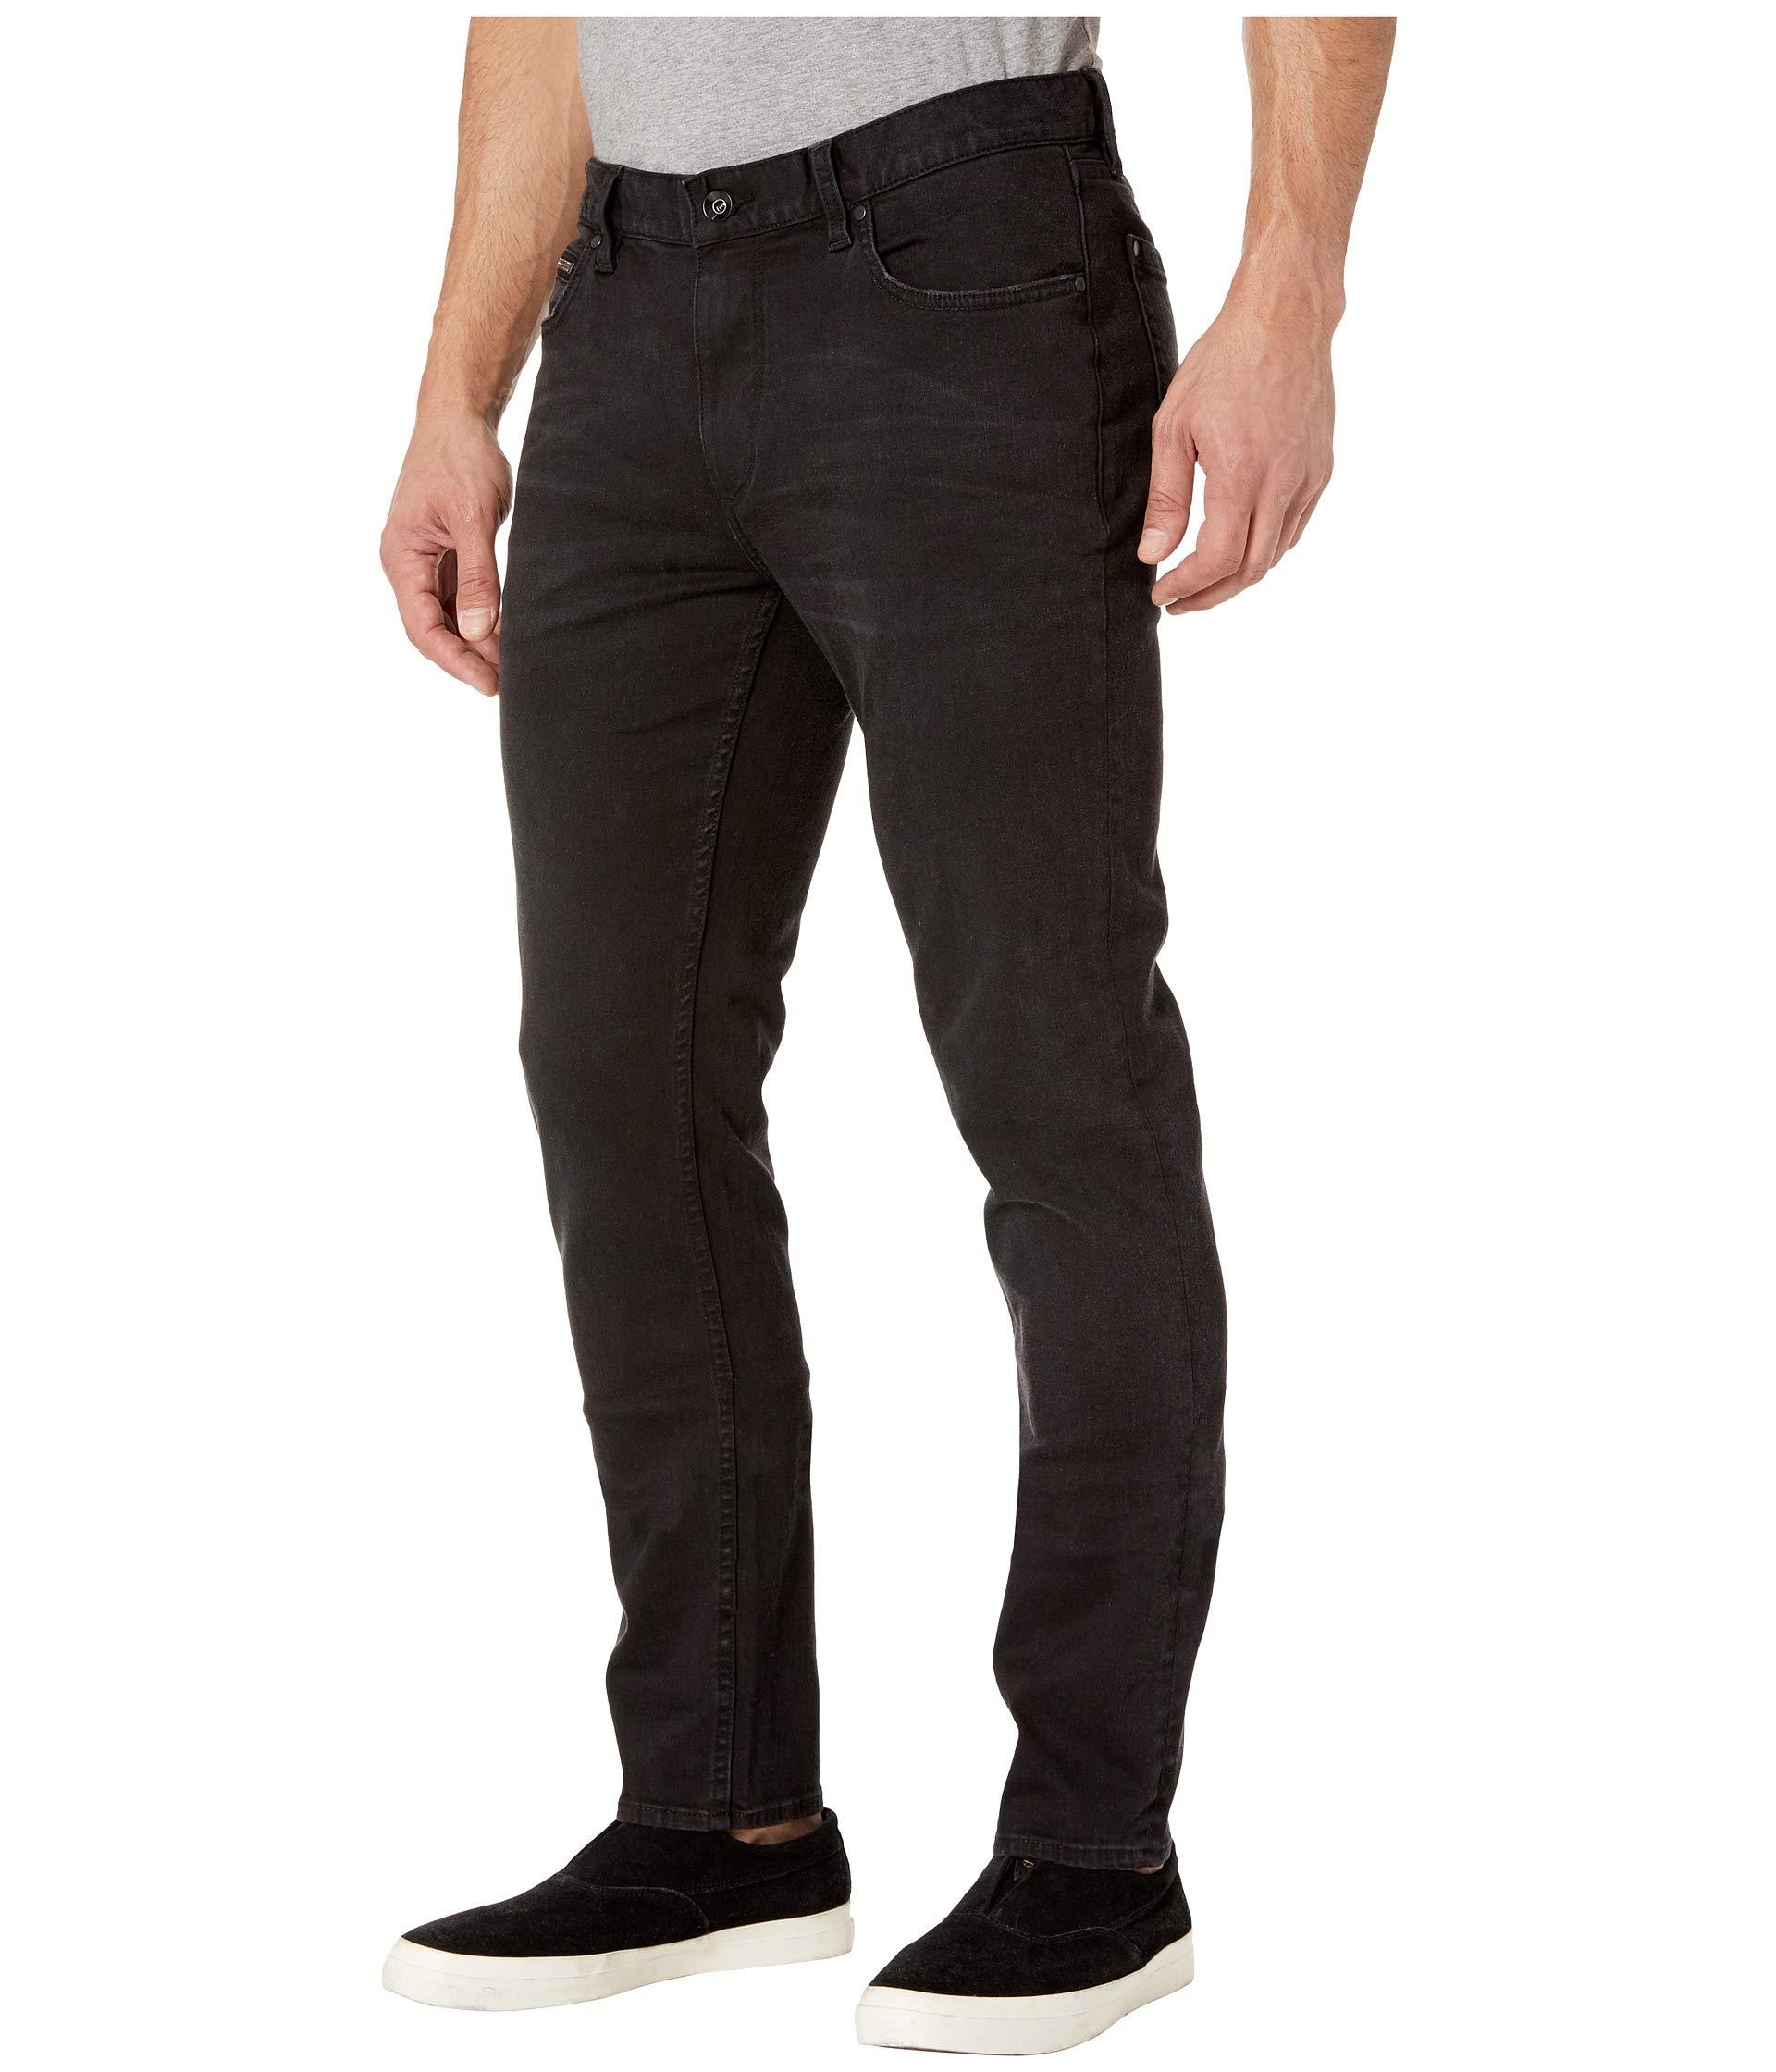 John Varvatos Denim Chelsea Fit Zipper Pocket Jeans In Black for Men - Lyst